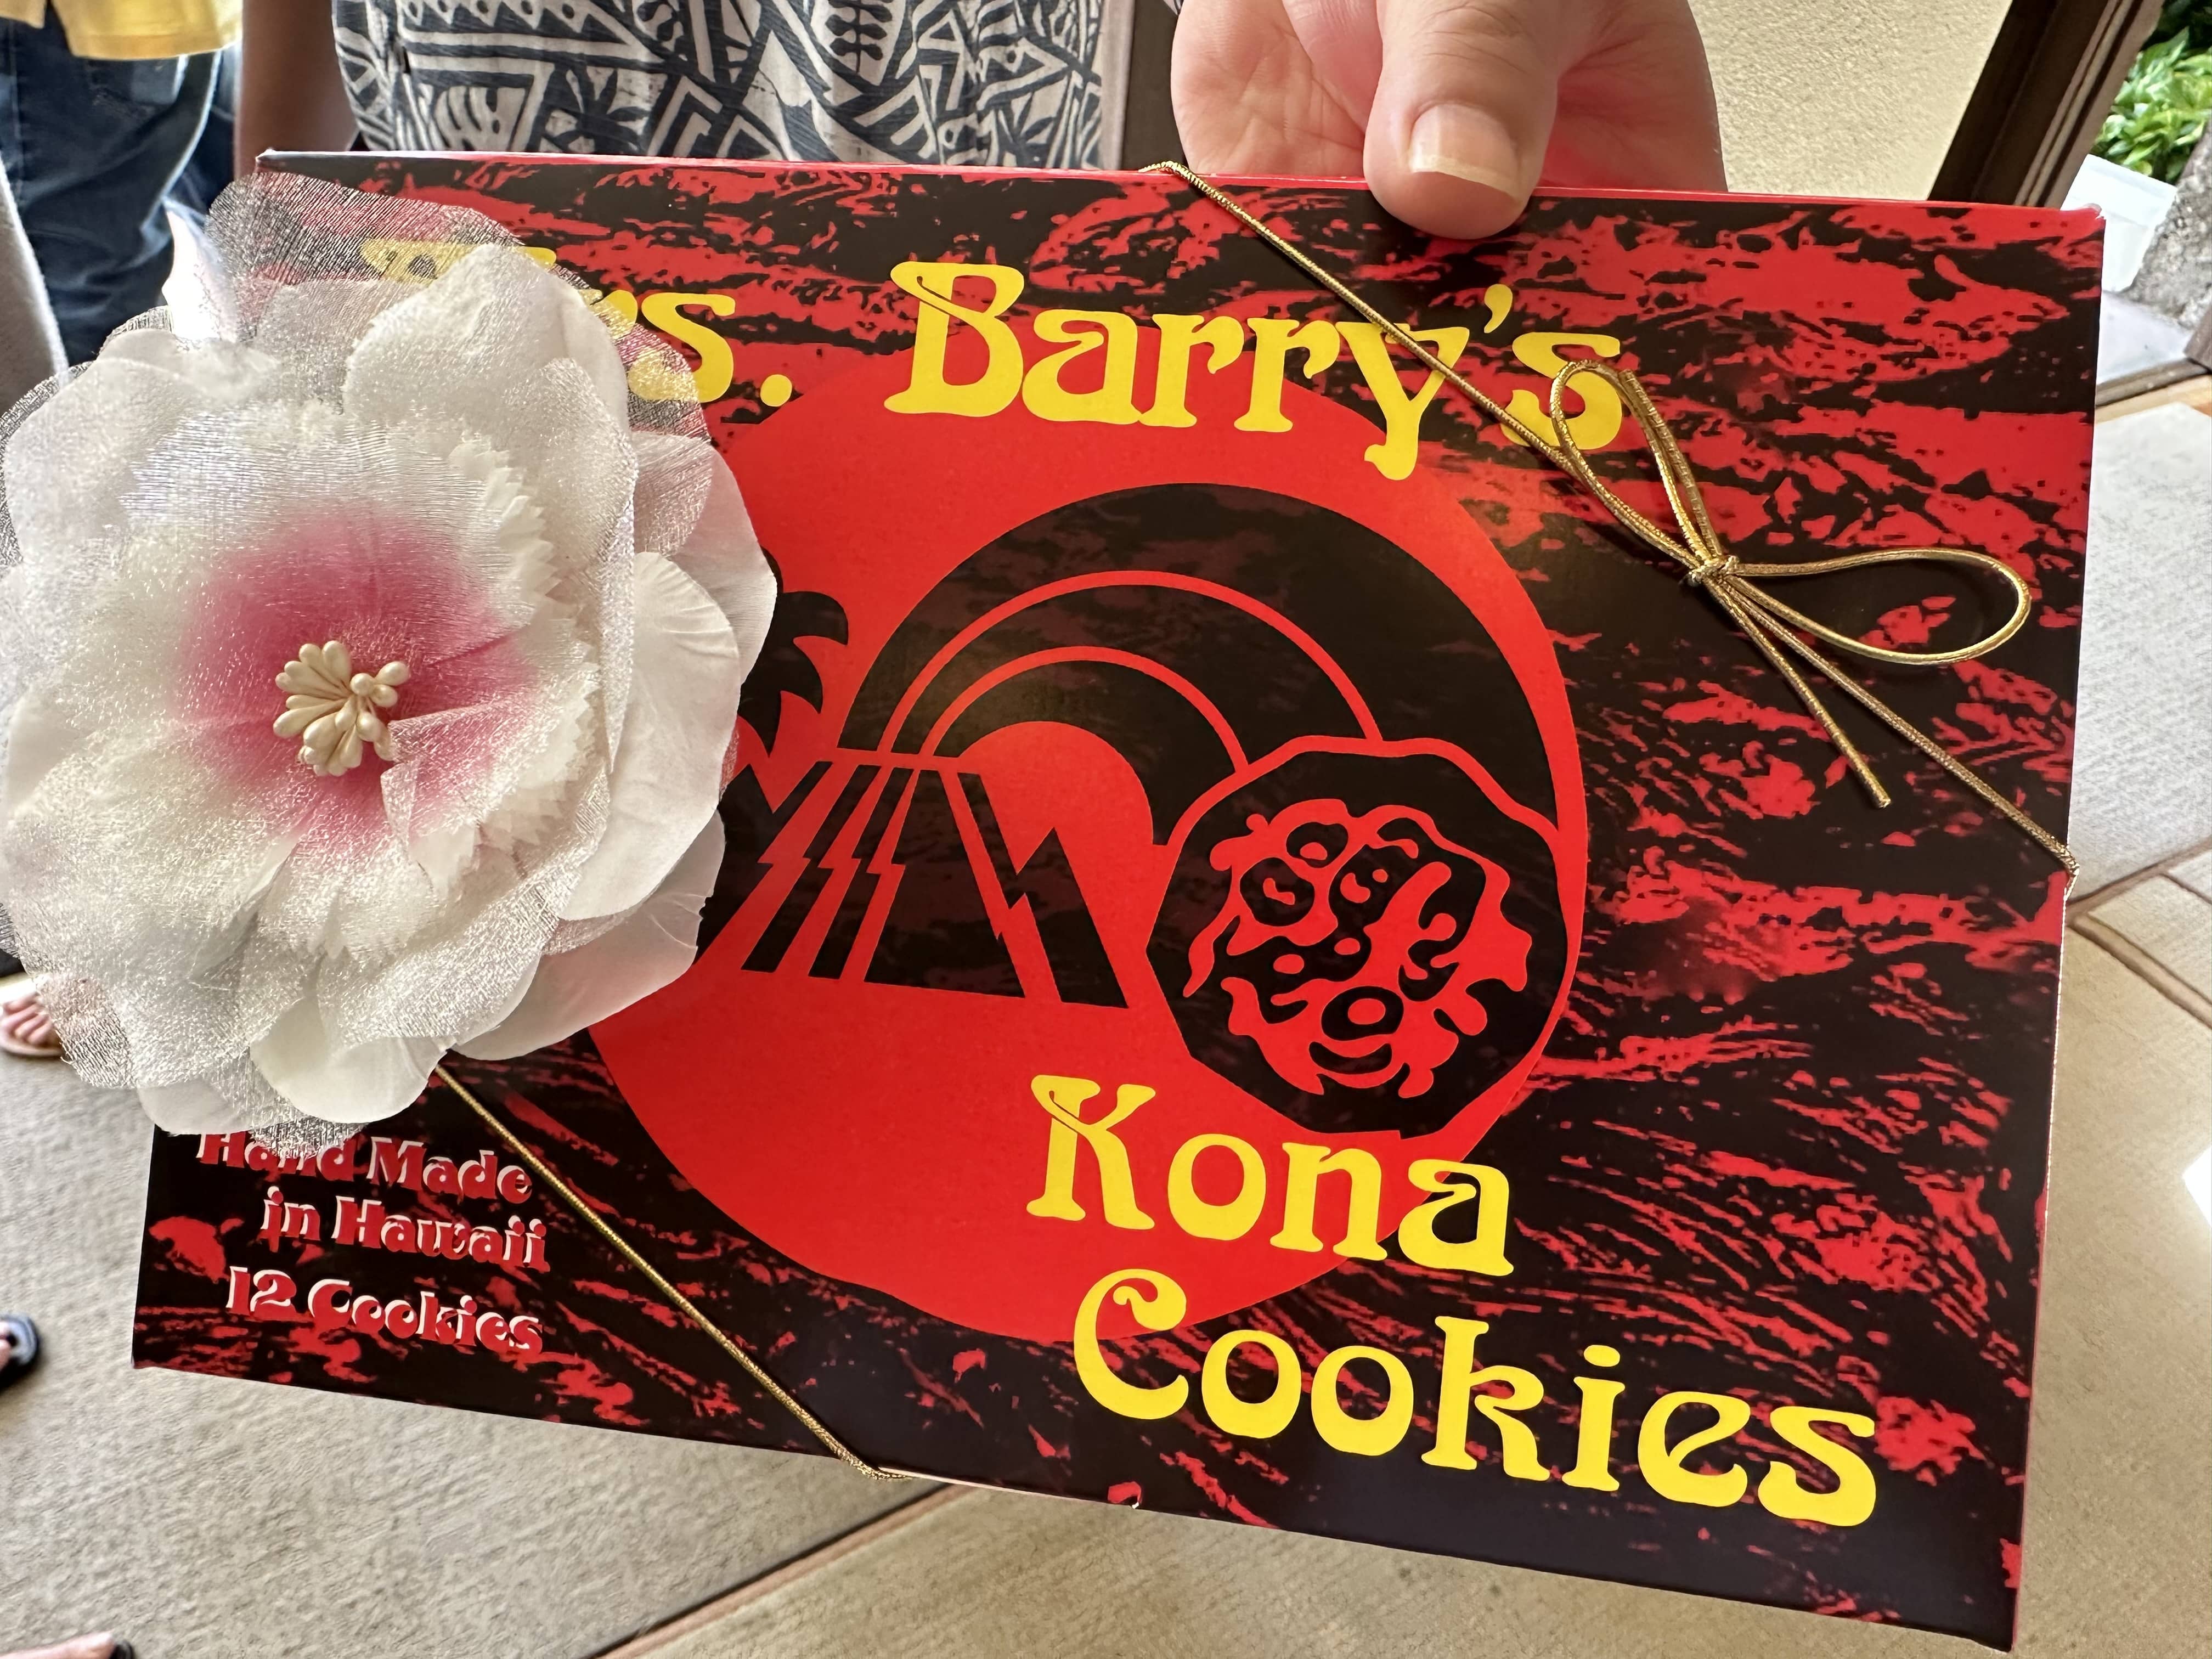 Mrs. Barry’s Kona Cookies（ミセズバリーズコナクッキー）